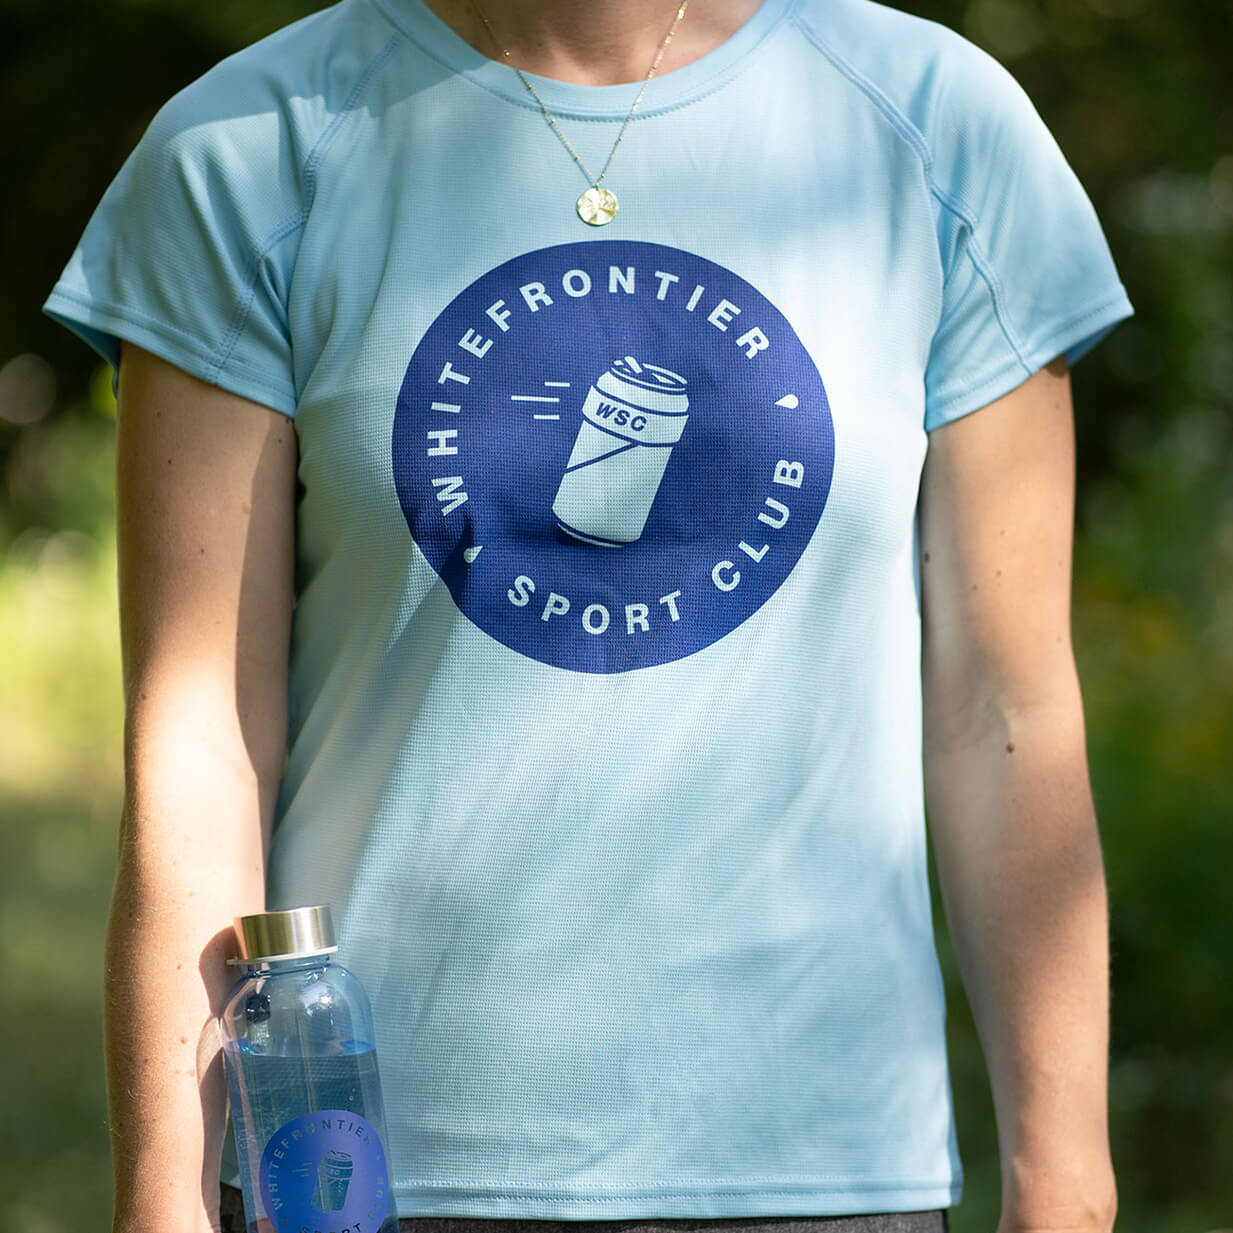 Gourde teeshirt bleu sport whitefrontier